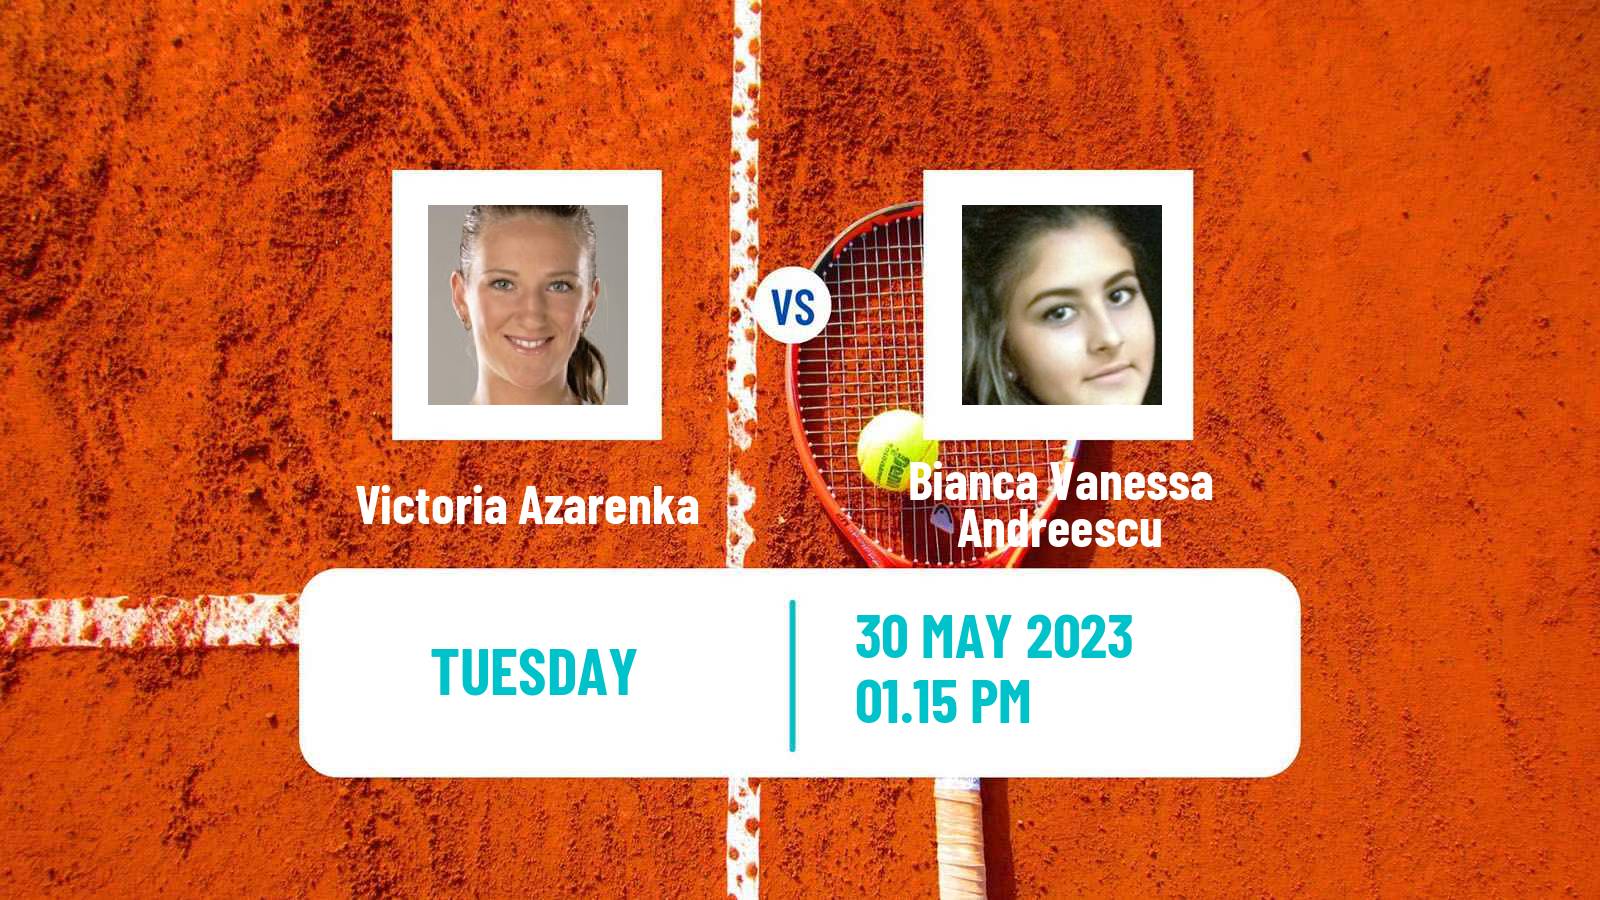 Tennis WTA Roland Garros Victoria Azarenka - Bianca Vanessa Andreescu